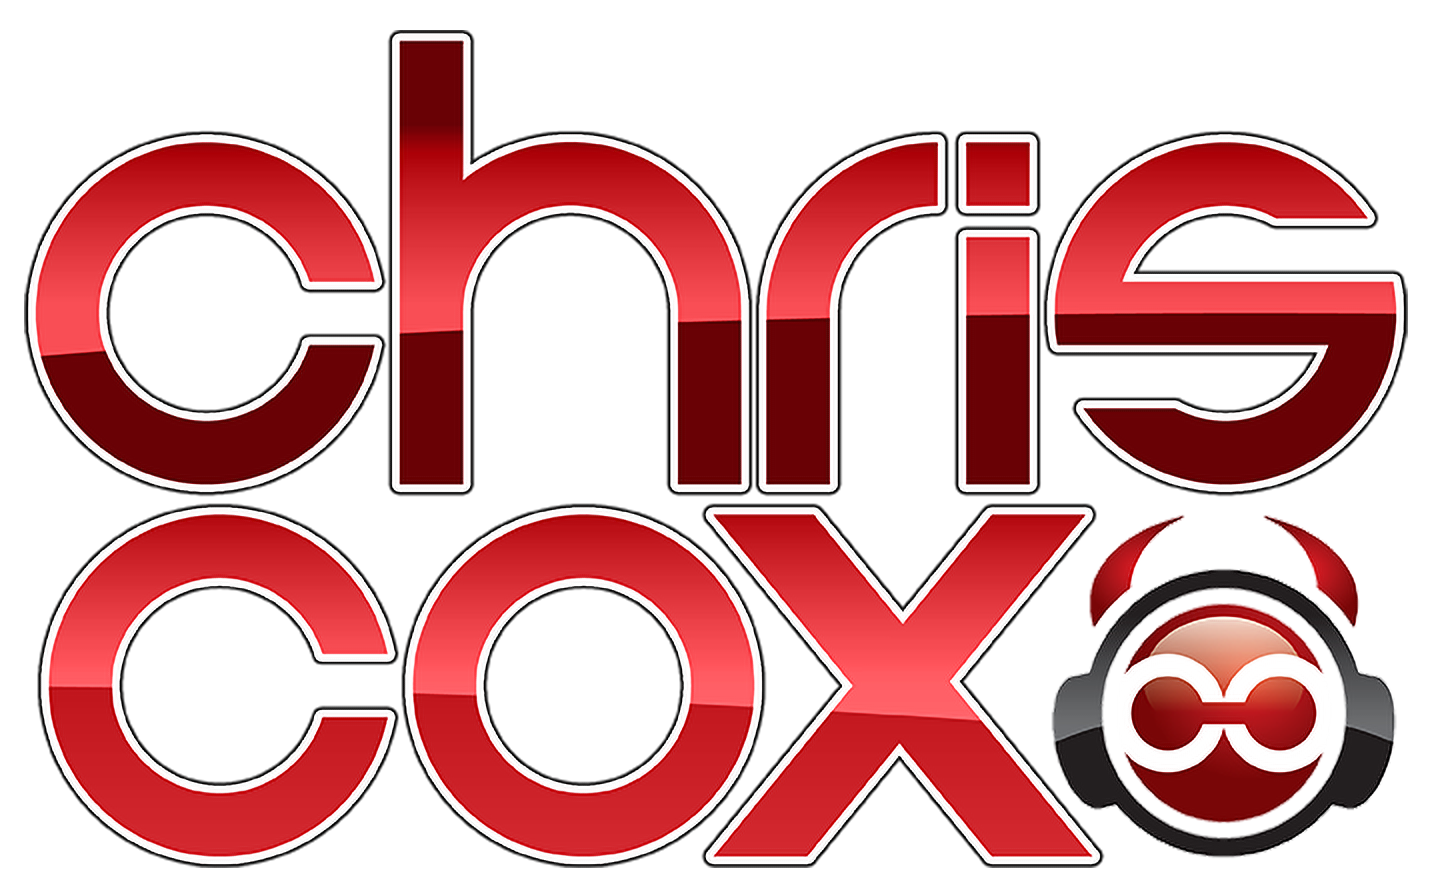 chriscox.net | Official home of Chris Cox